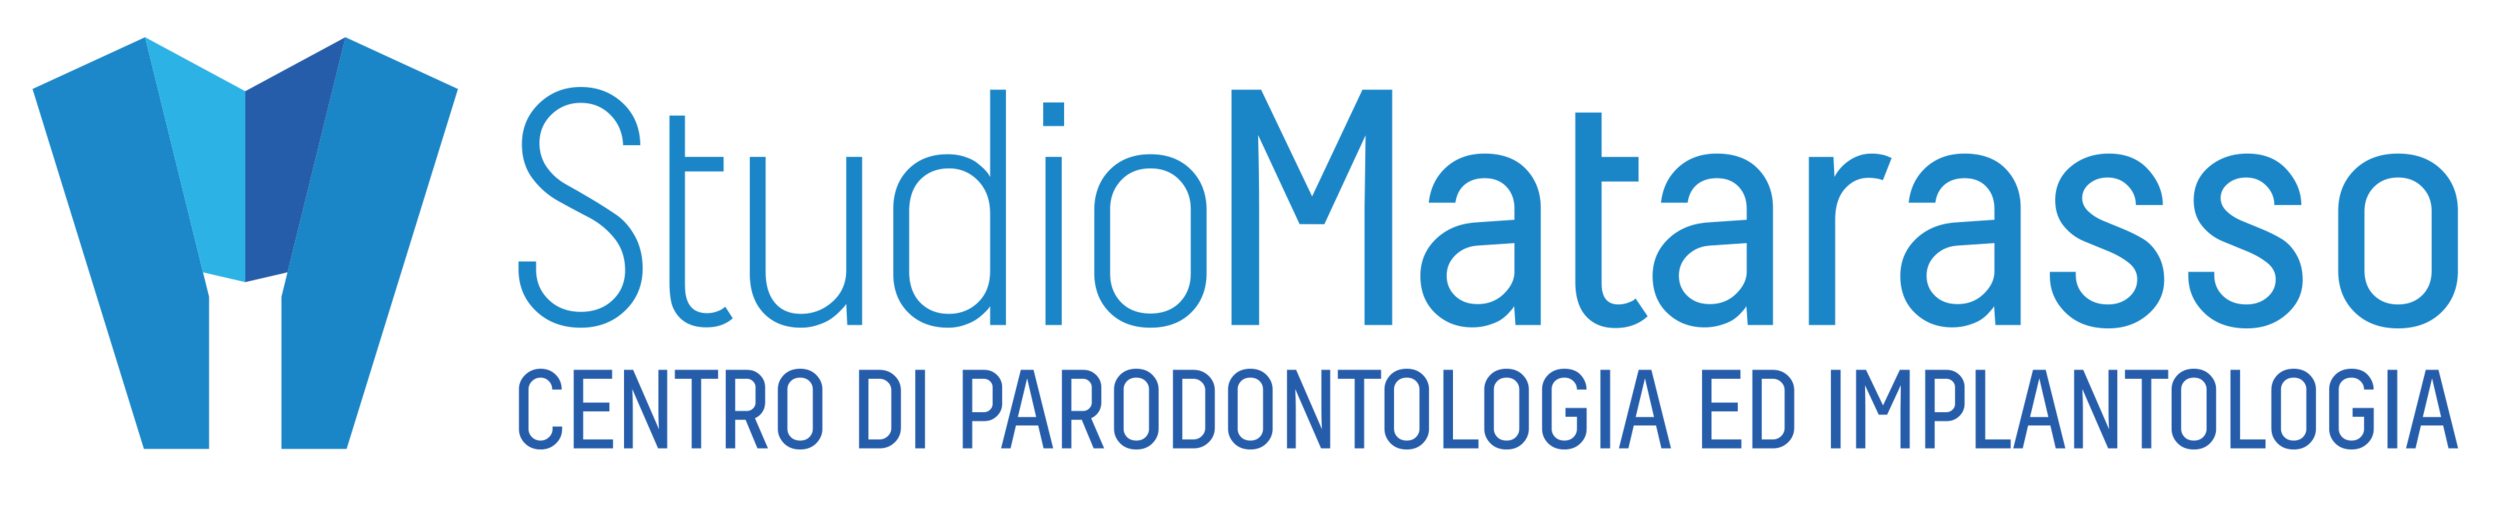 Studio Matarasso - Centro di Parodontologia ed Implantologia